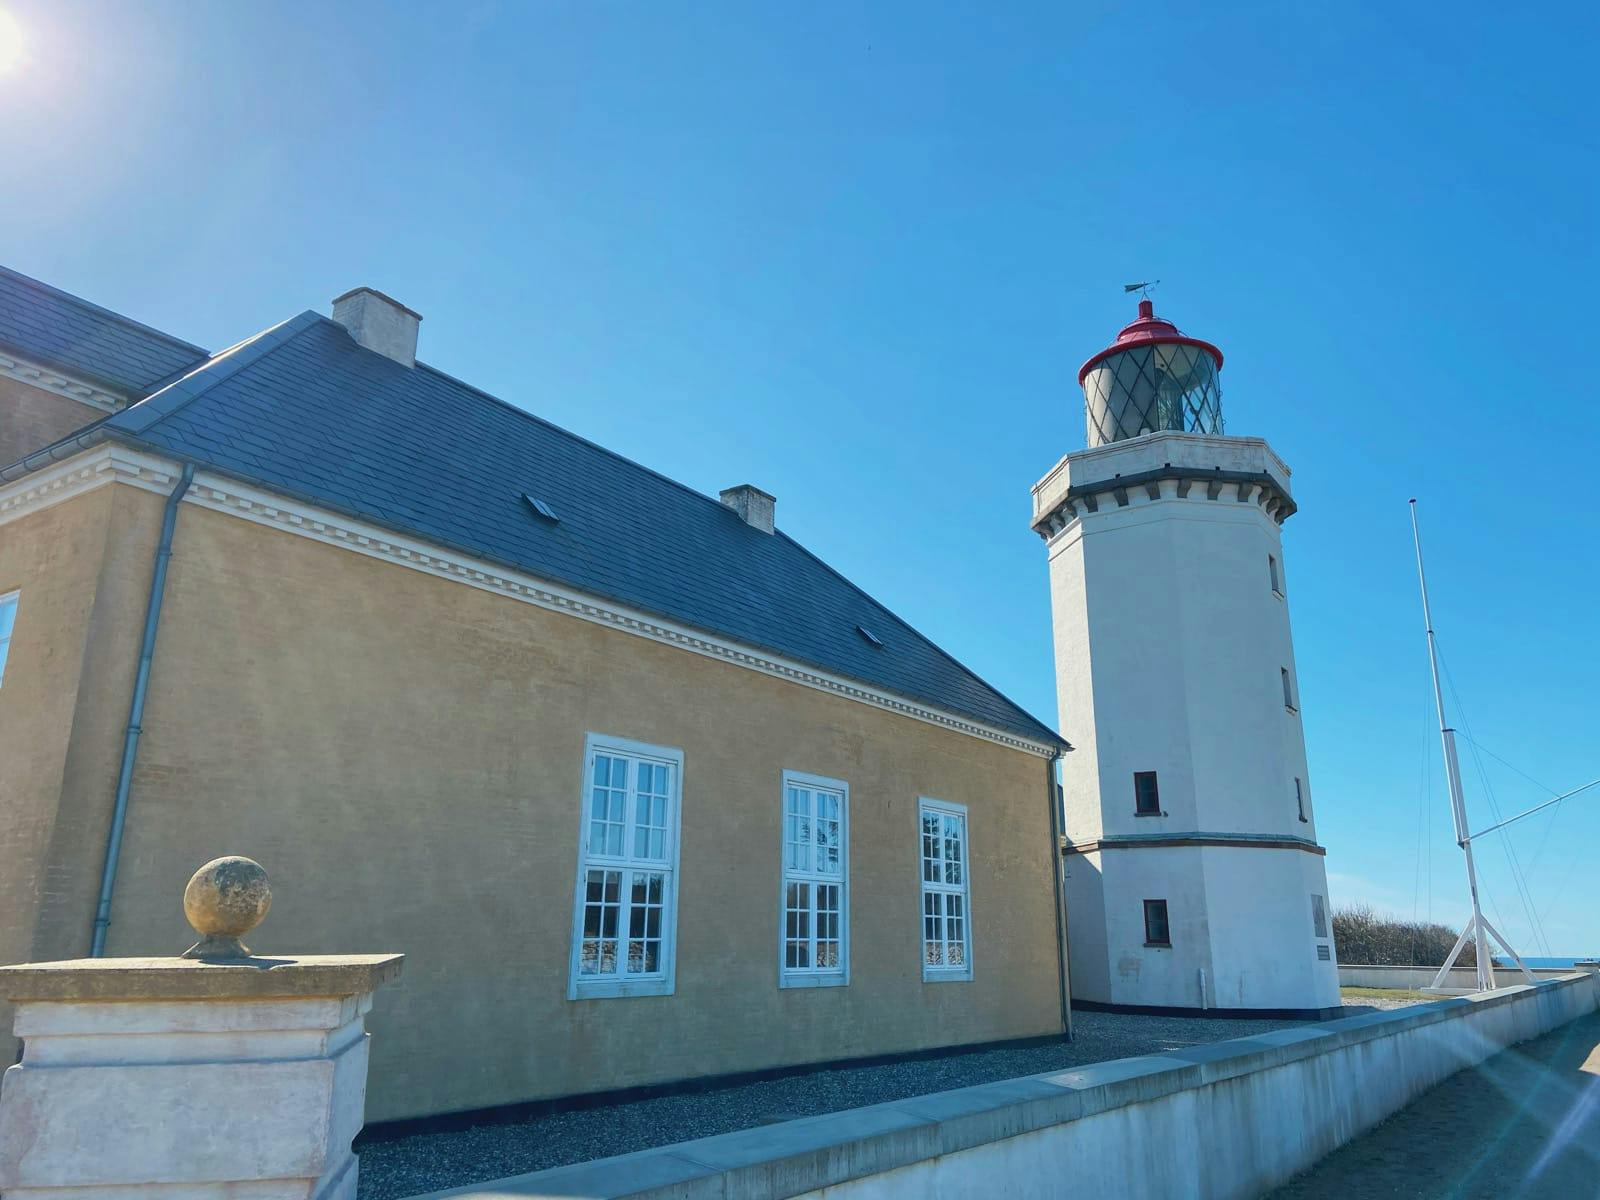 Hanstholm Lighthouse - Thy National Park